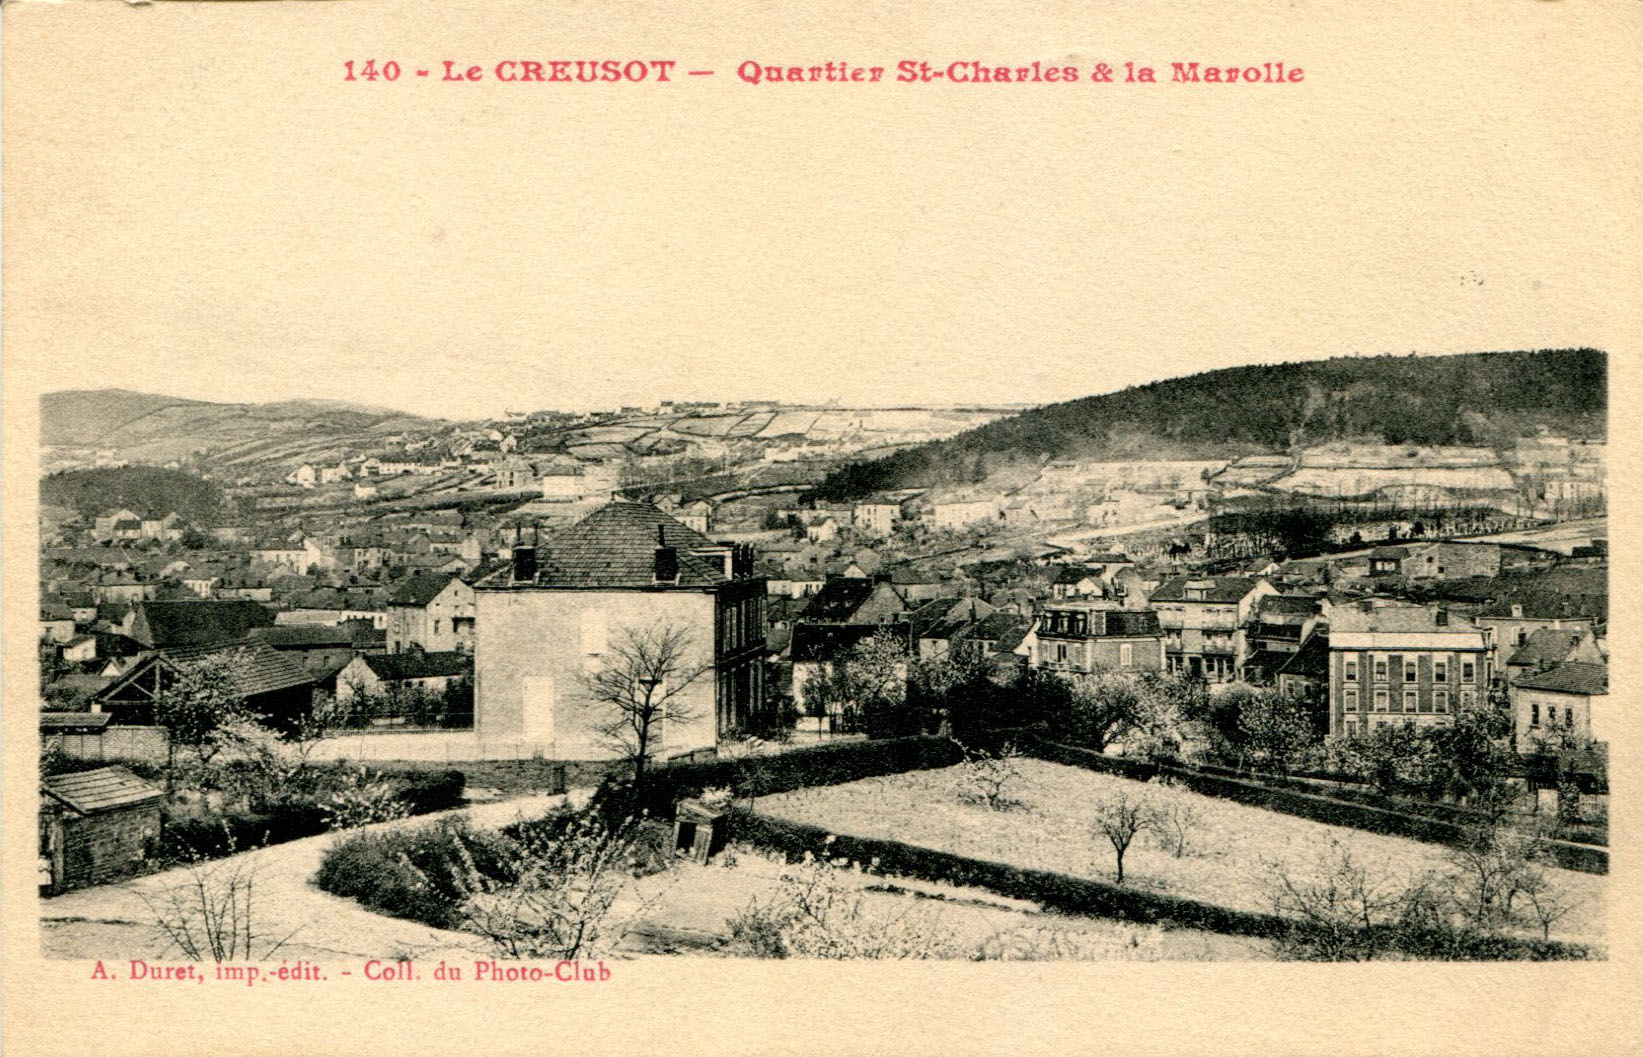 St-Charles et la Marolle